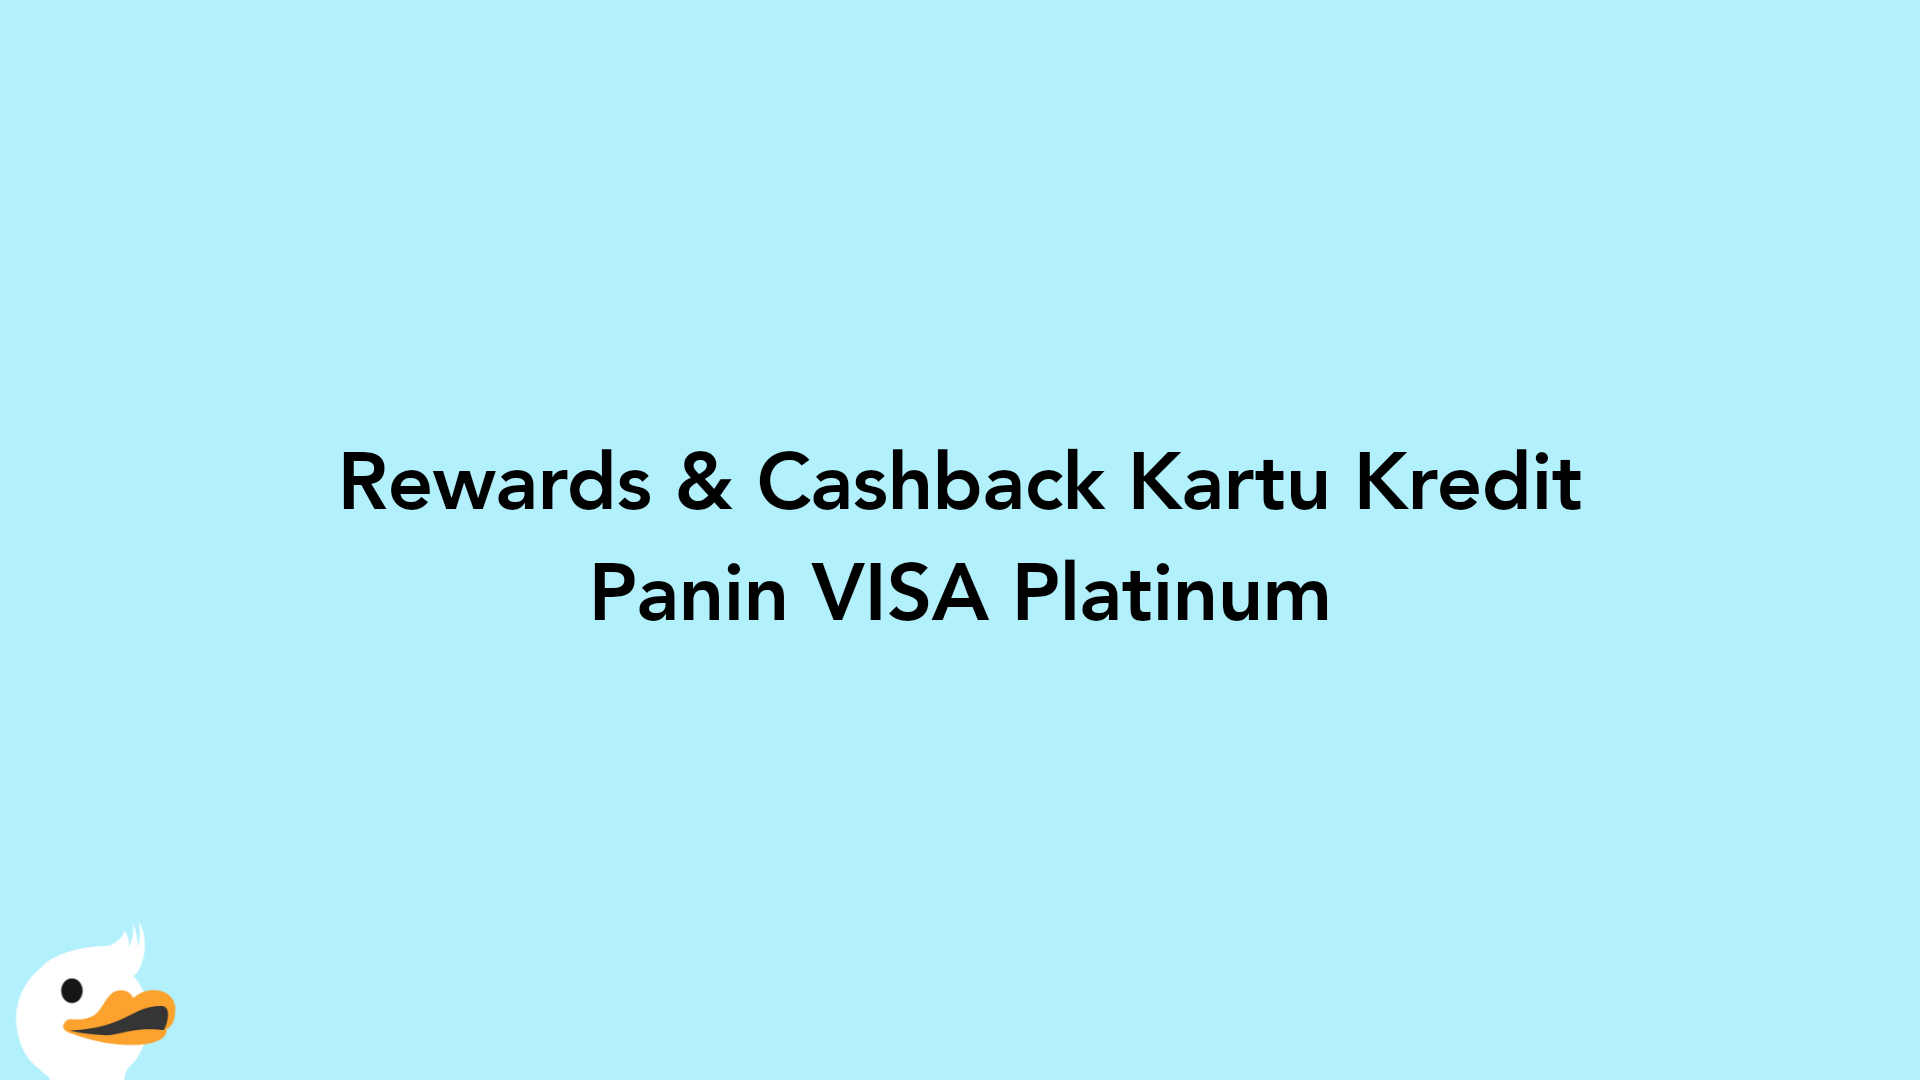 Rewards & Cashback Kartu Kredit Panin VISA Platinum